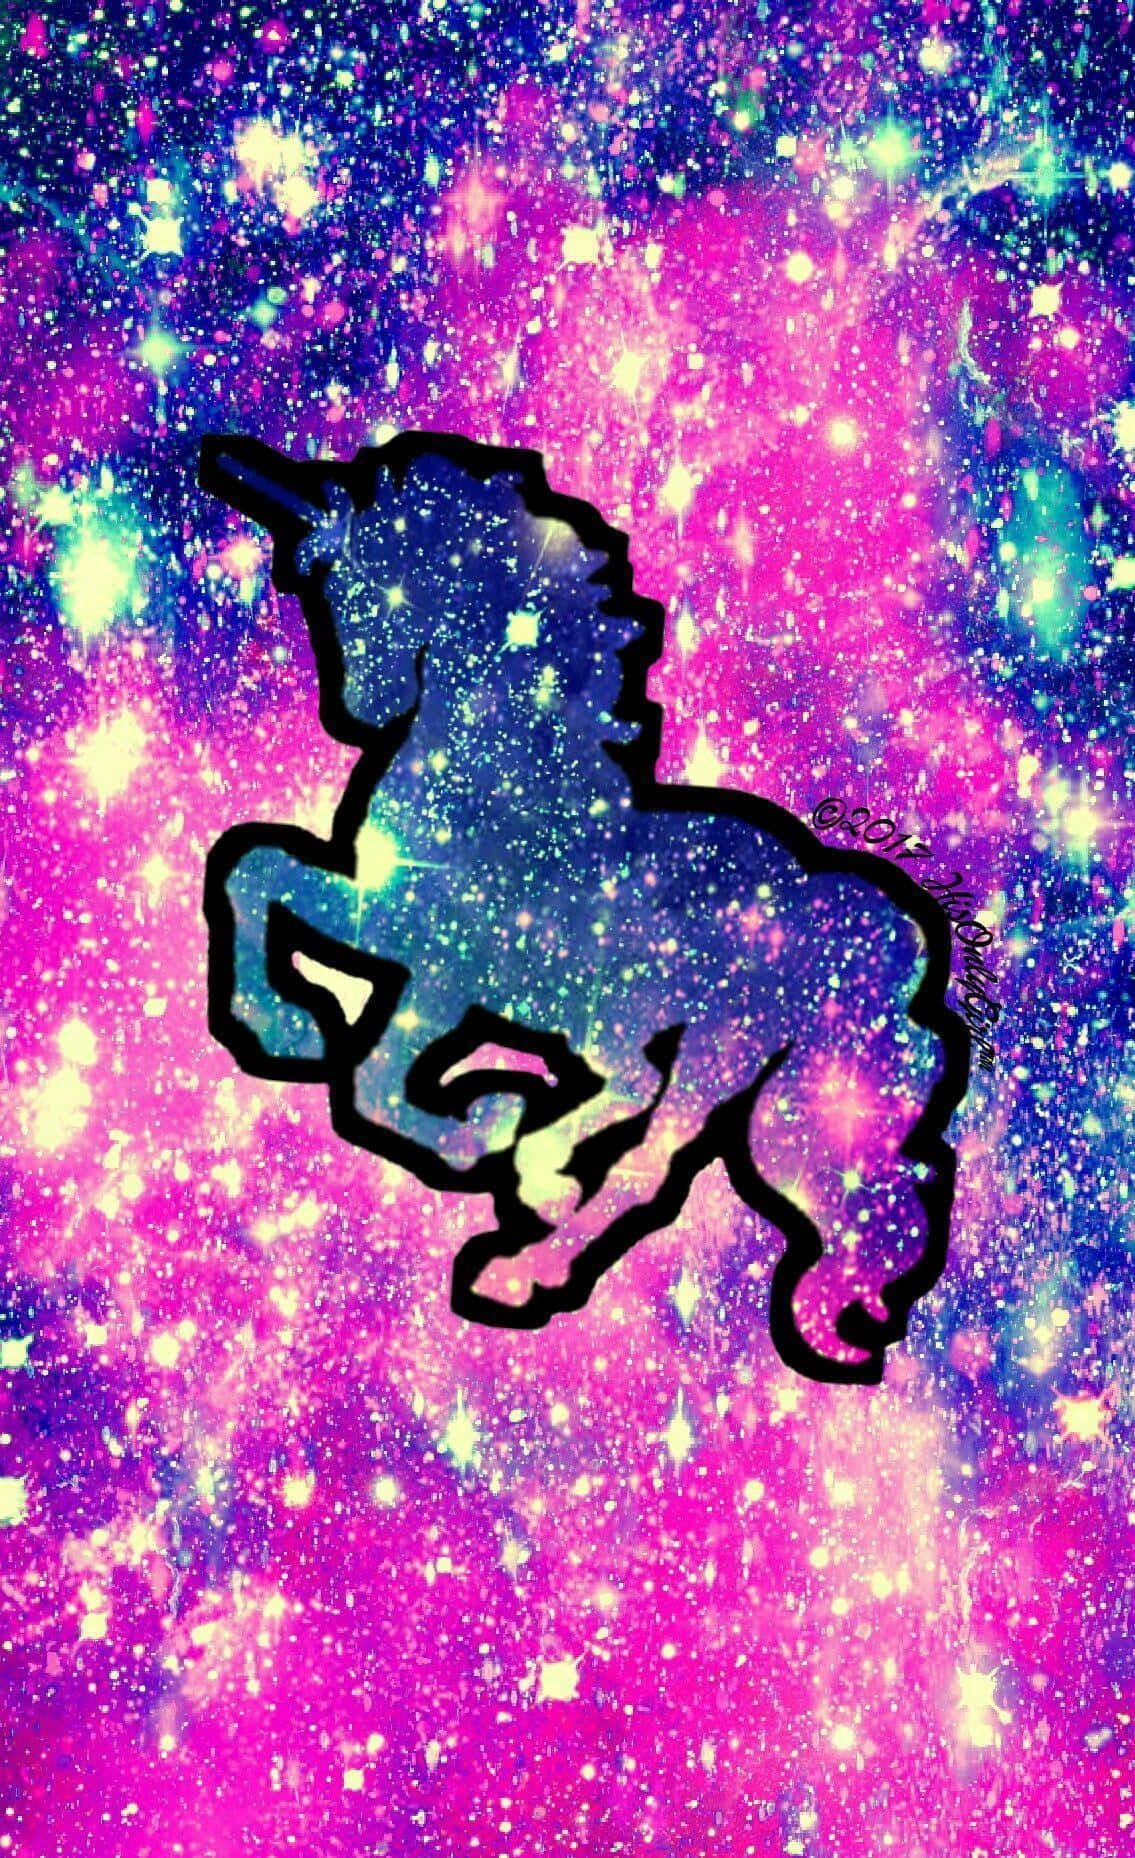 Stunning Galaxy Unicorn in a Cosmic Adventure